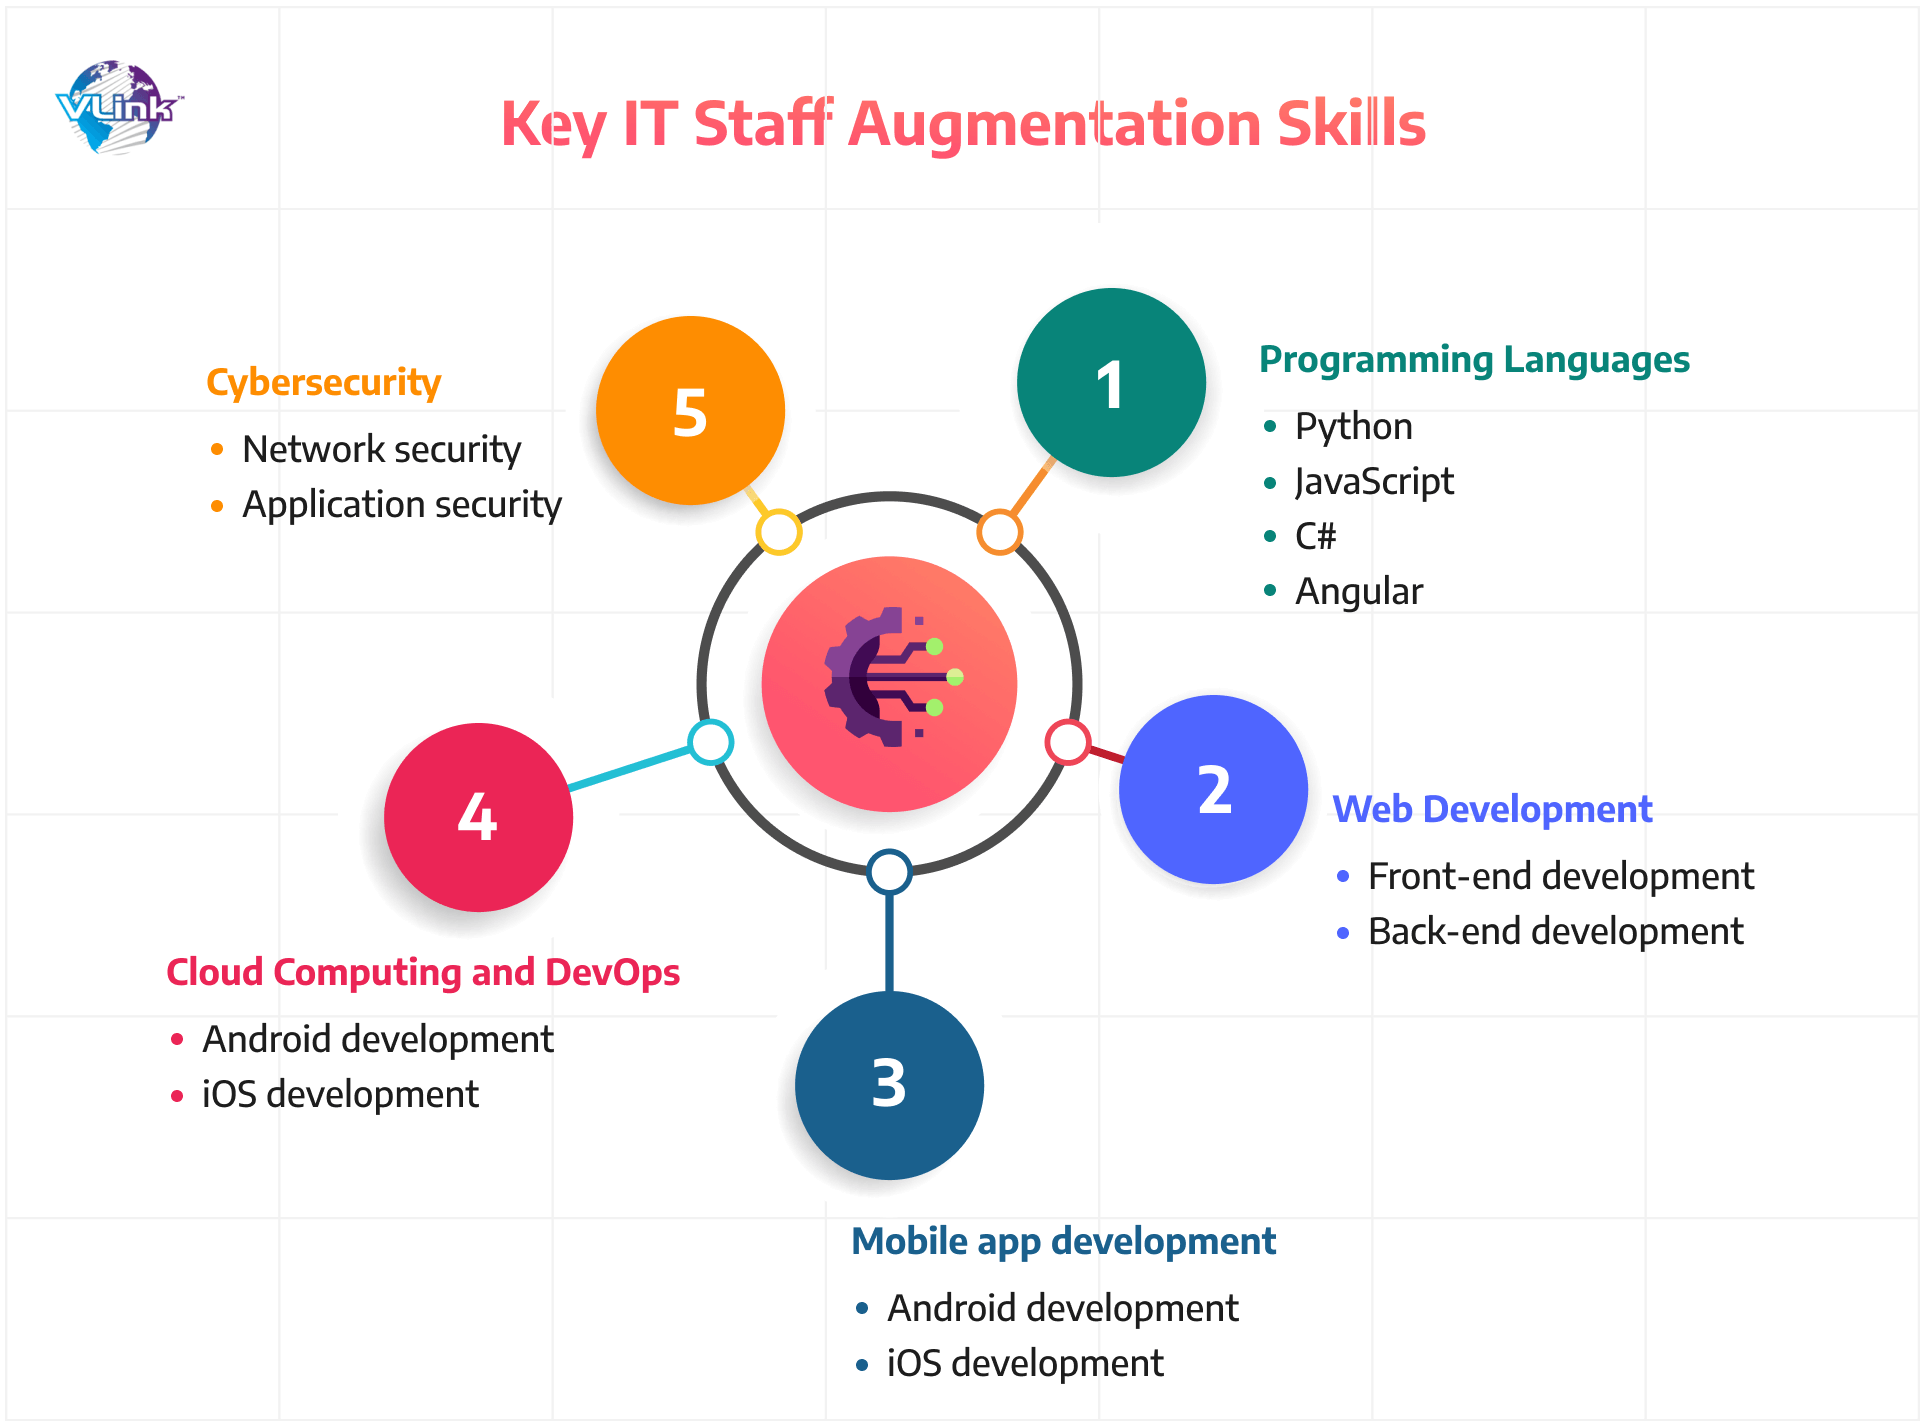 Key IT Staff Augmentation Skills for Software Development